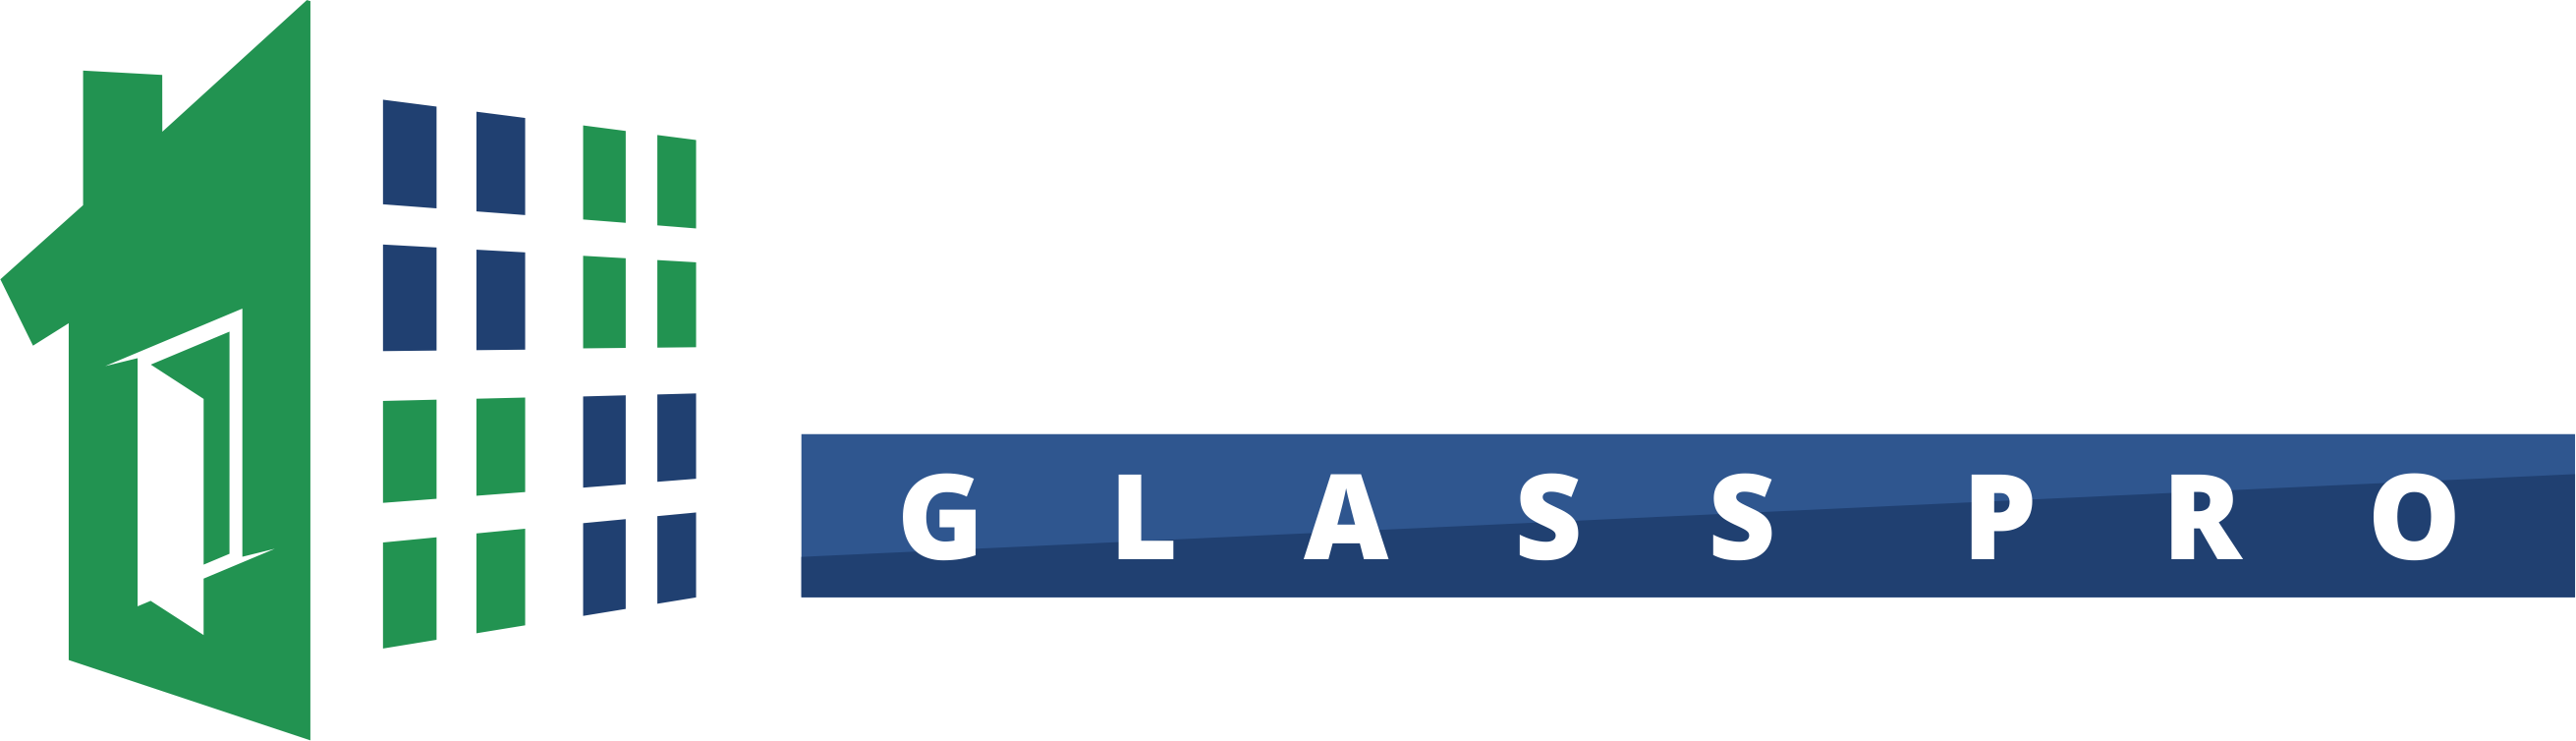 Baltimore Glass Pro